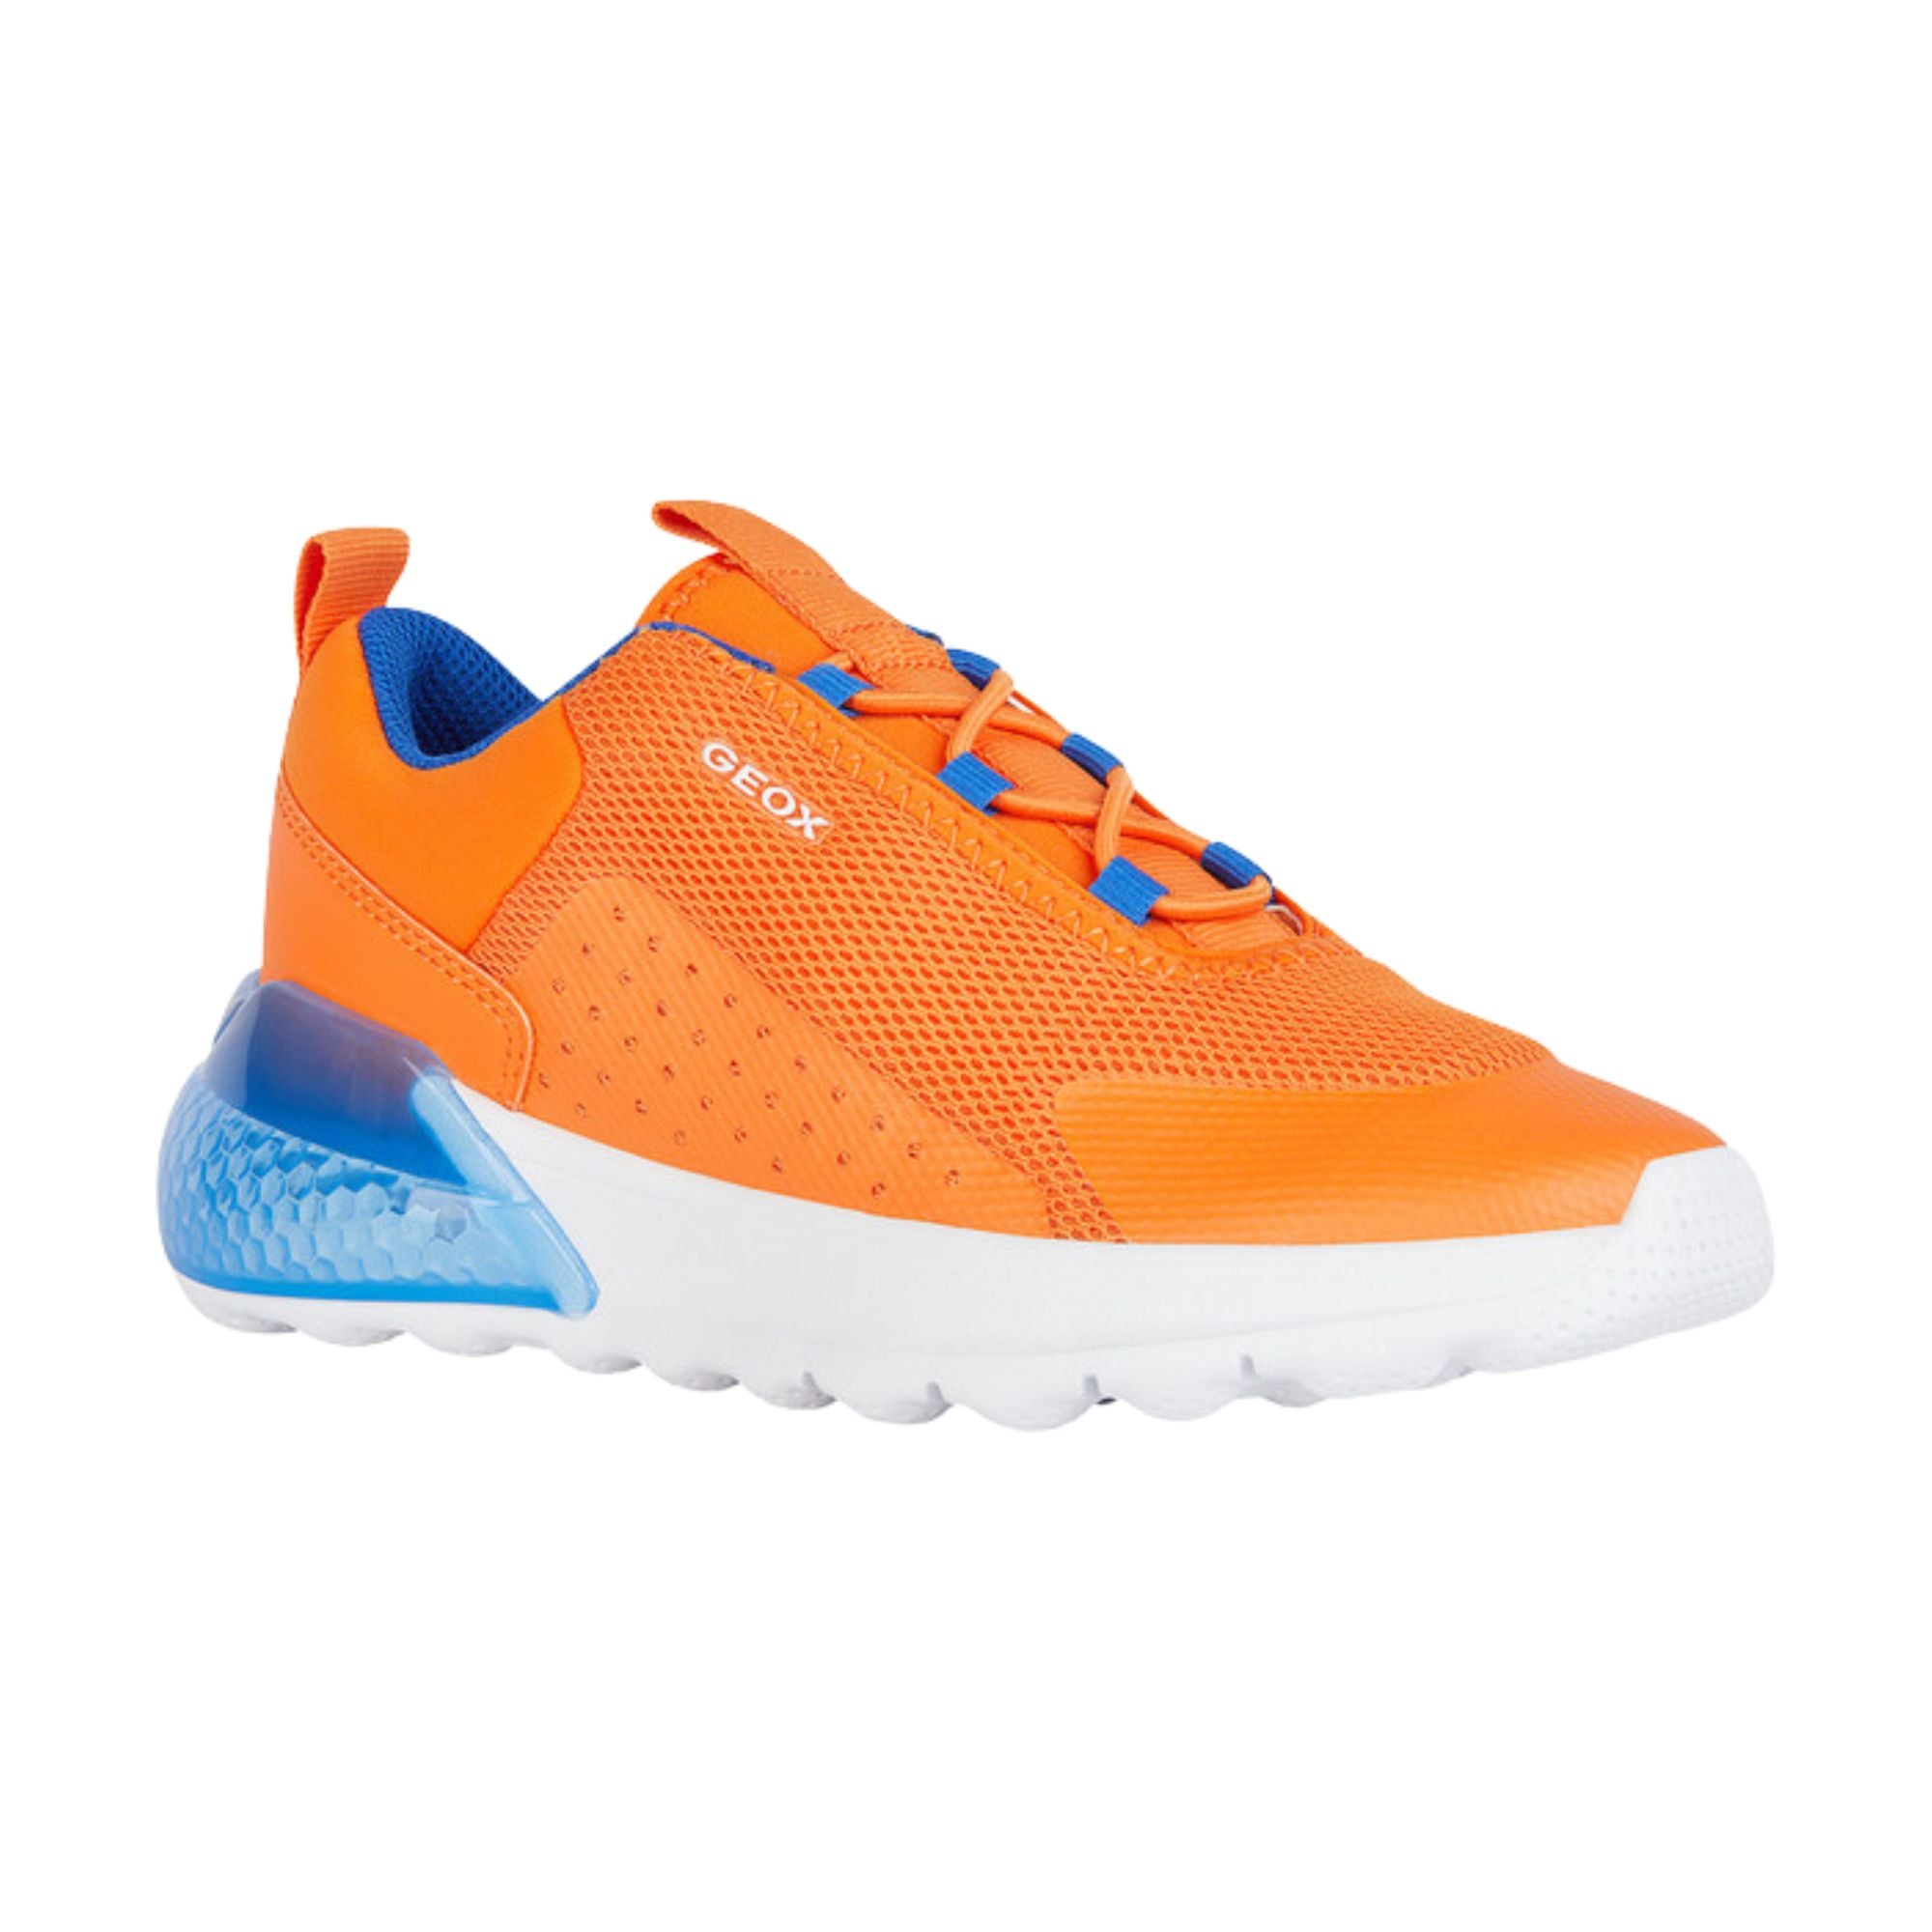 Geox Activart Illuminus Orange Sneakers